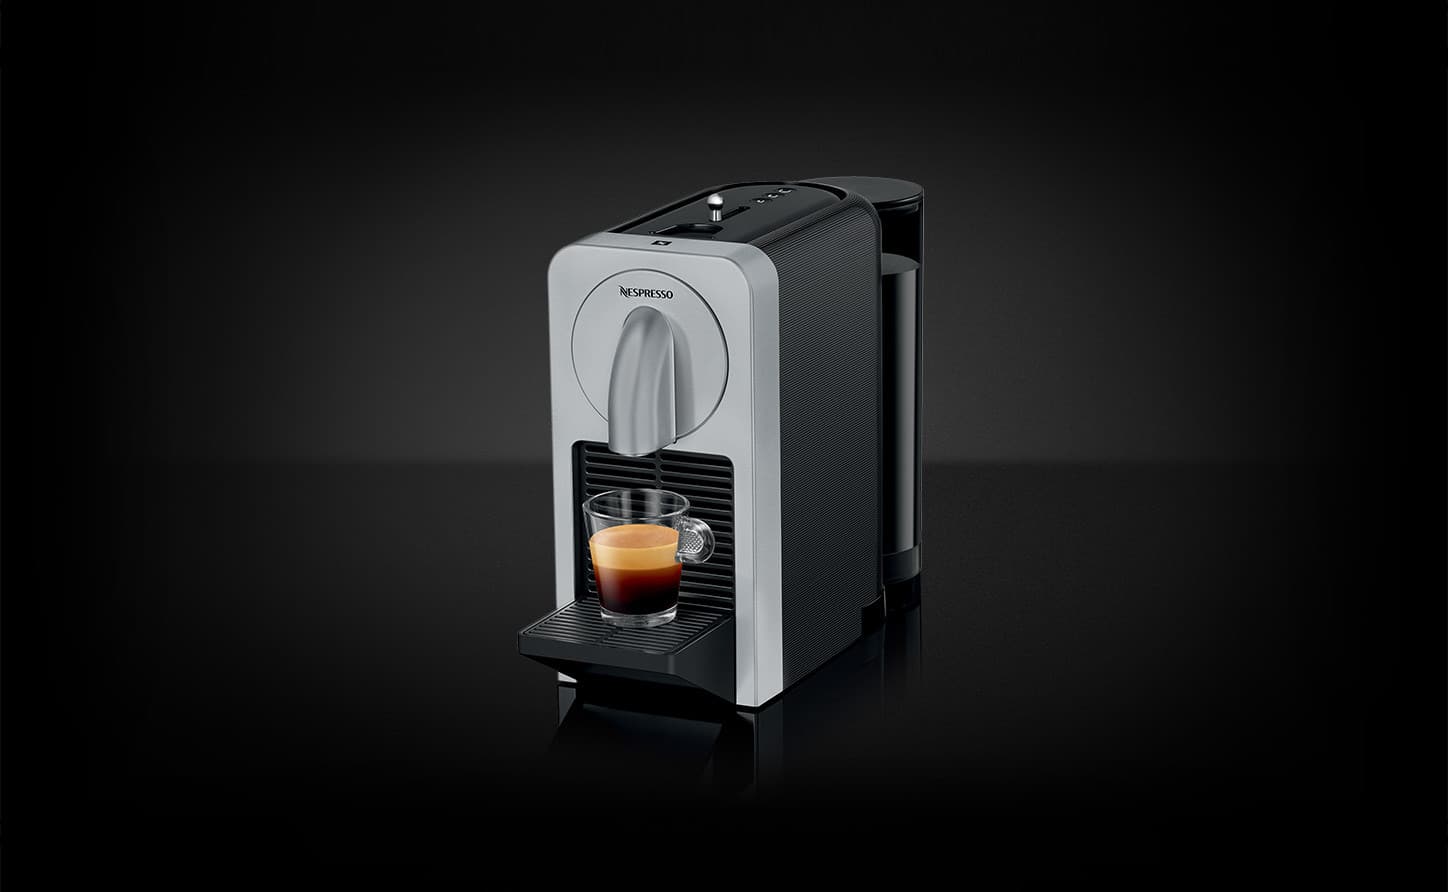 Nespresso's new Prodigio espresso machine is enabled | Stark Insider